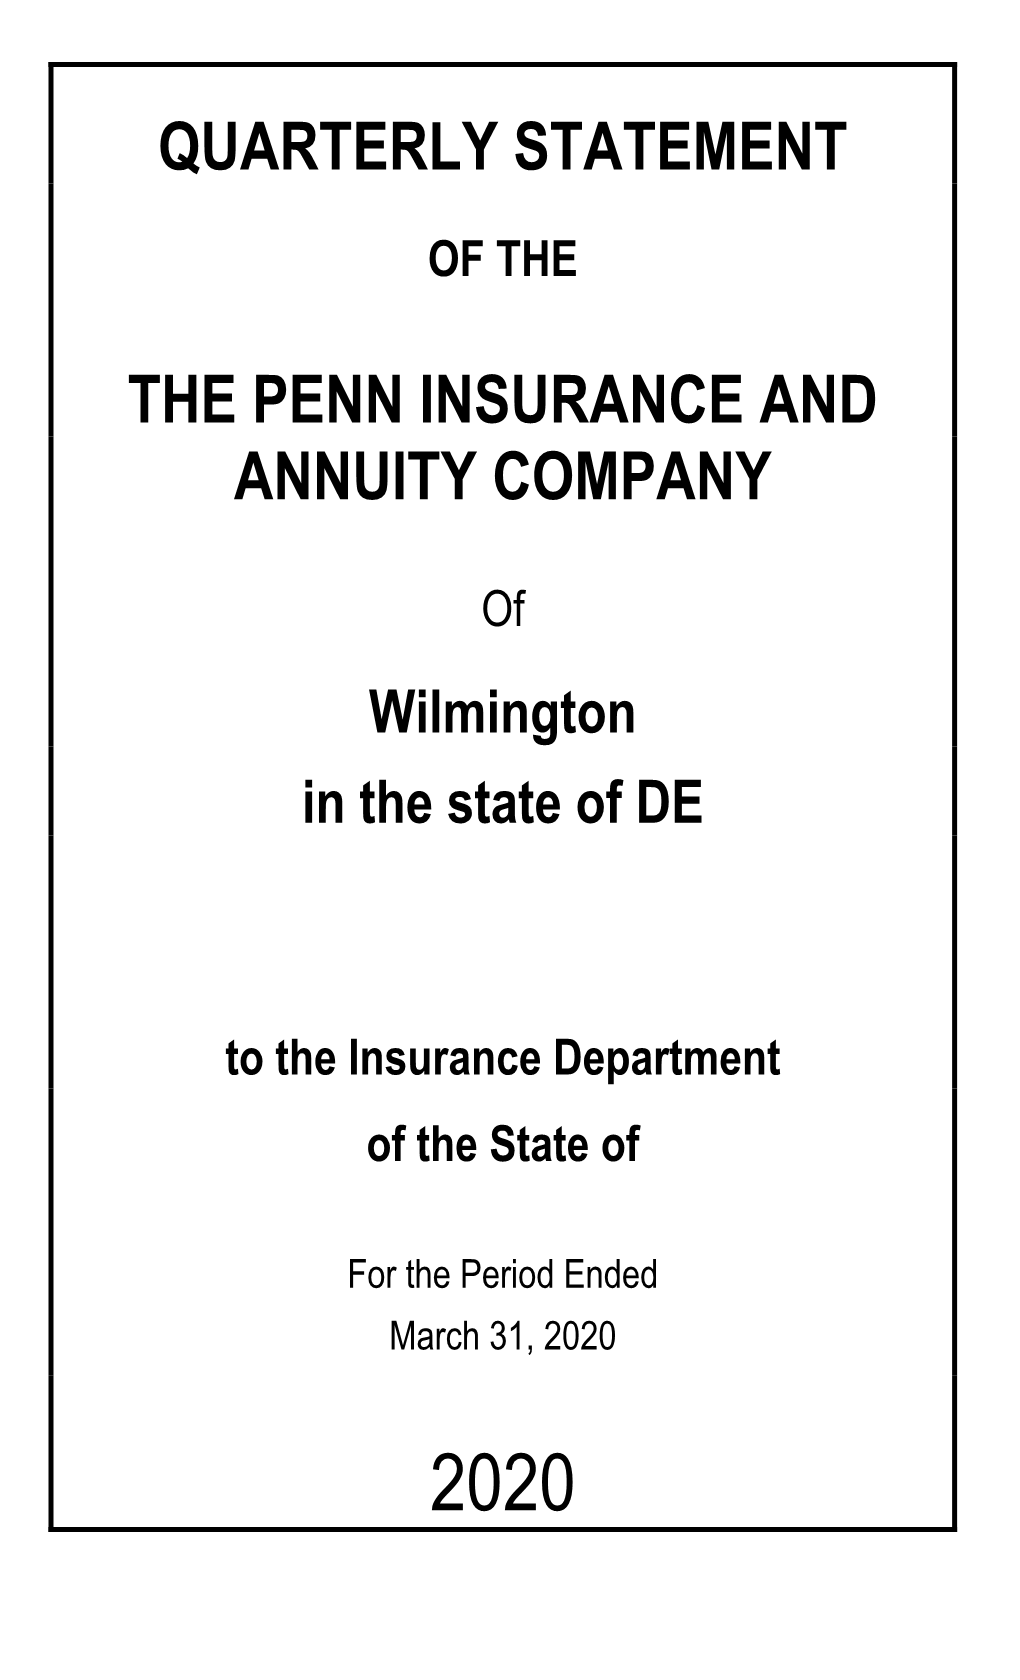 Quarterly Statement the Penn Insurance